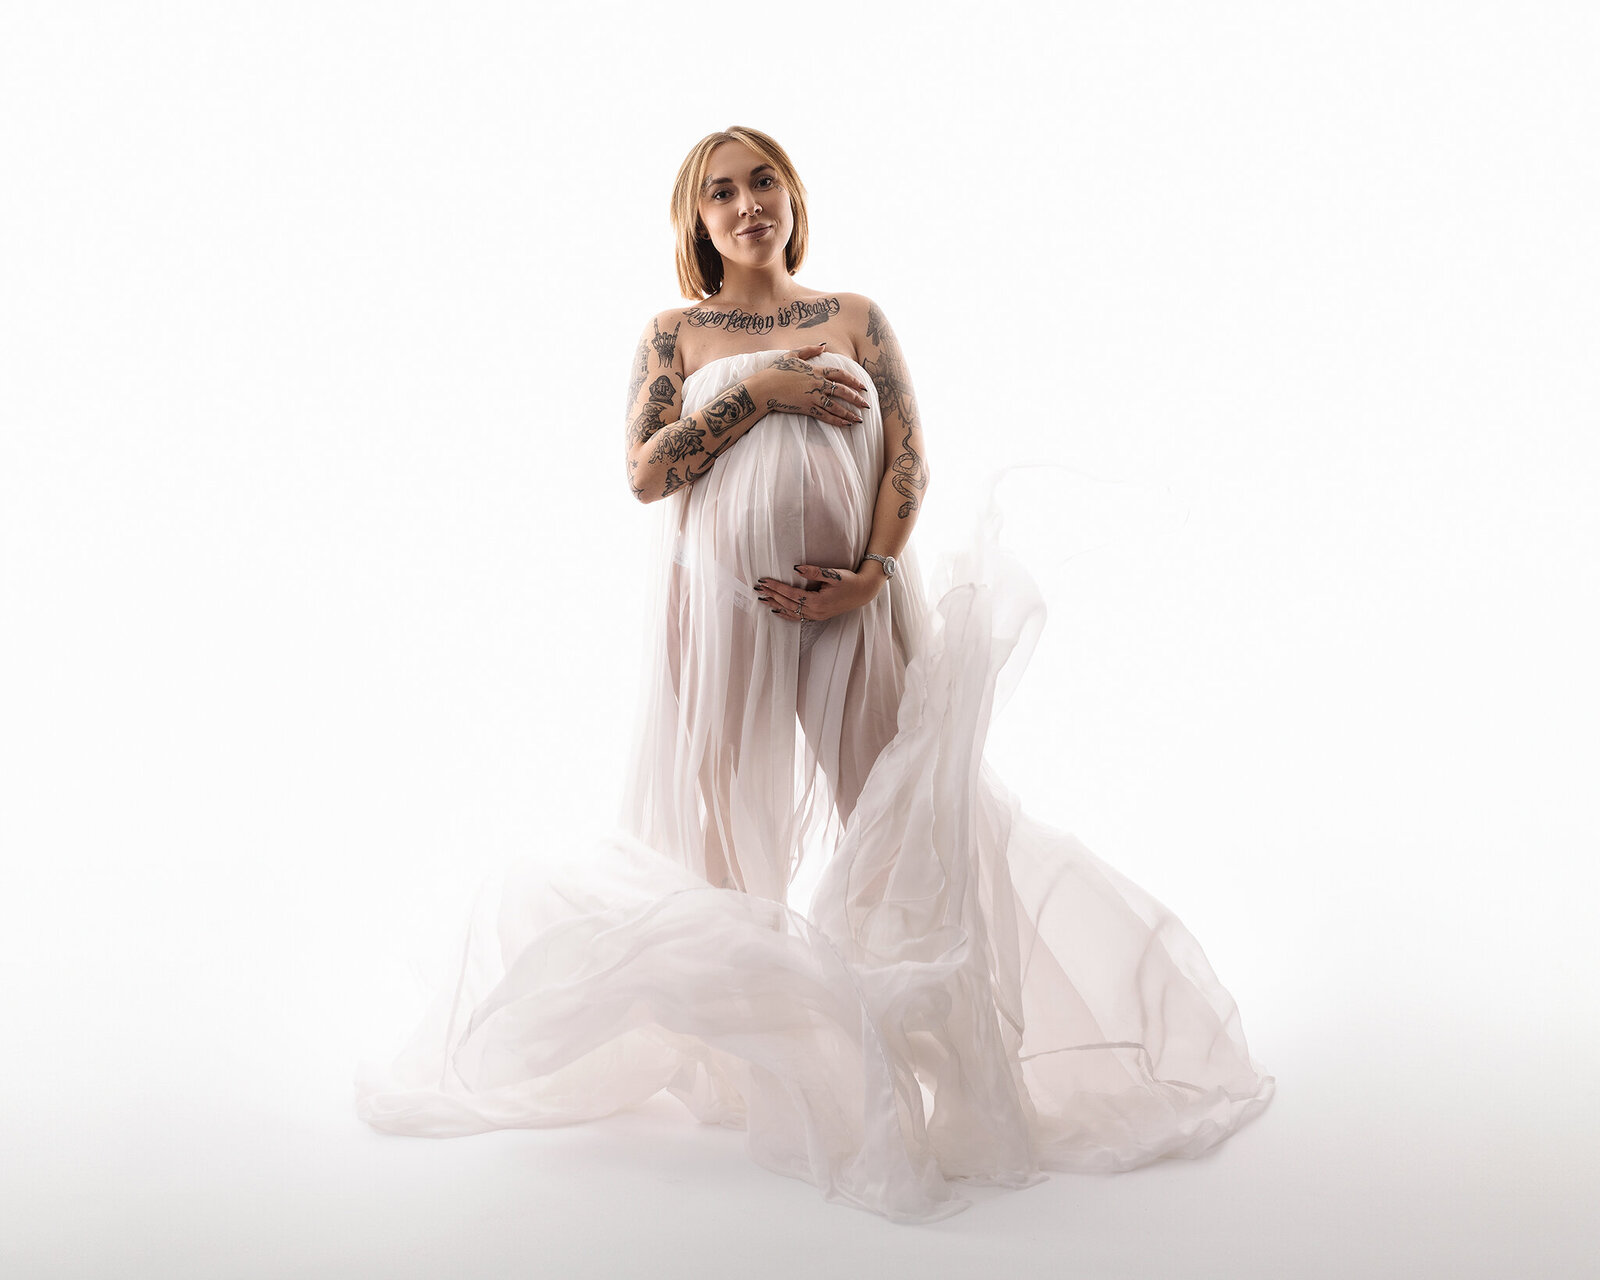 backlit white maternity pregnancy llanelliswansea carmarthen